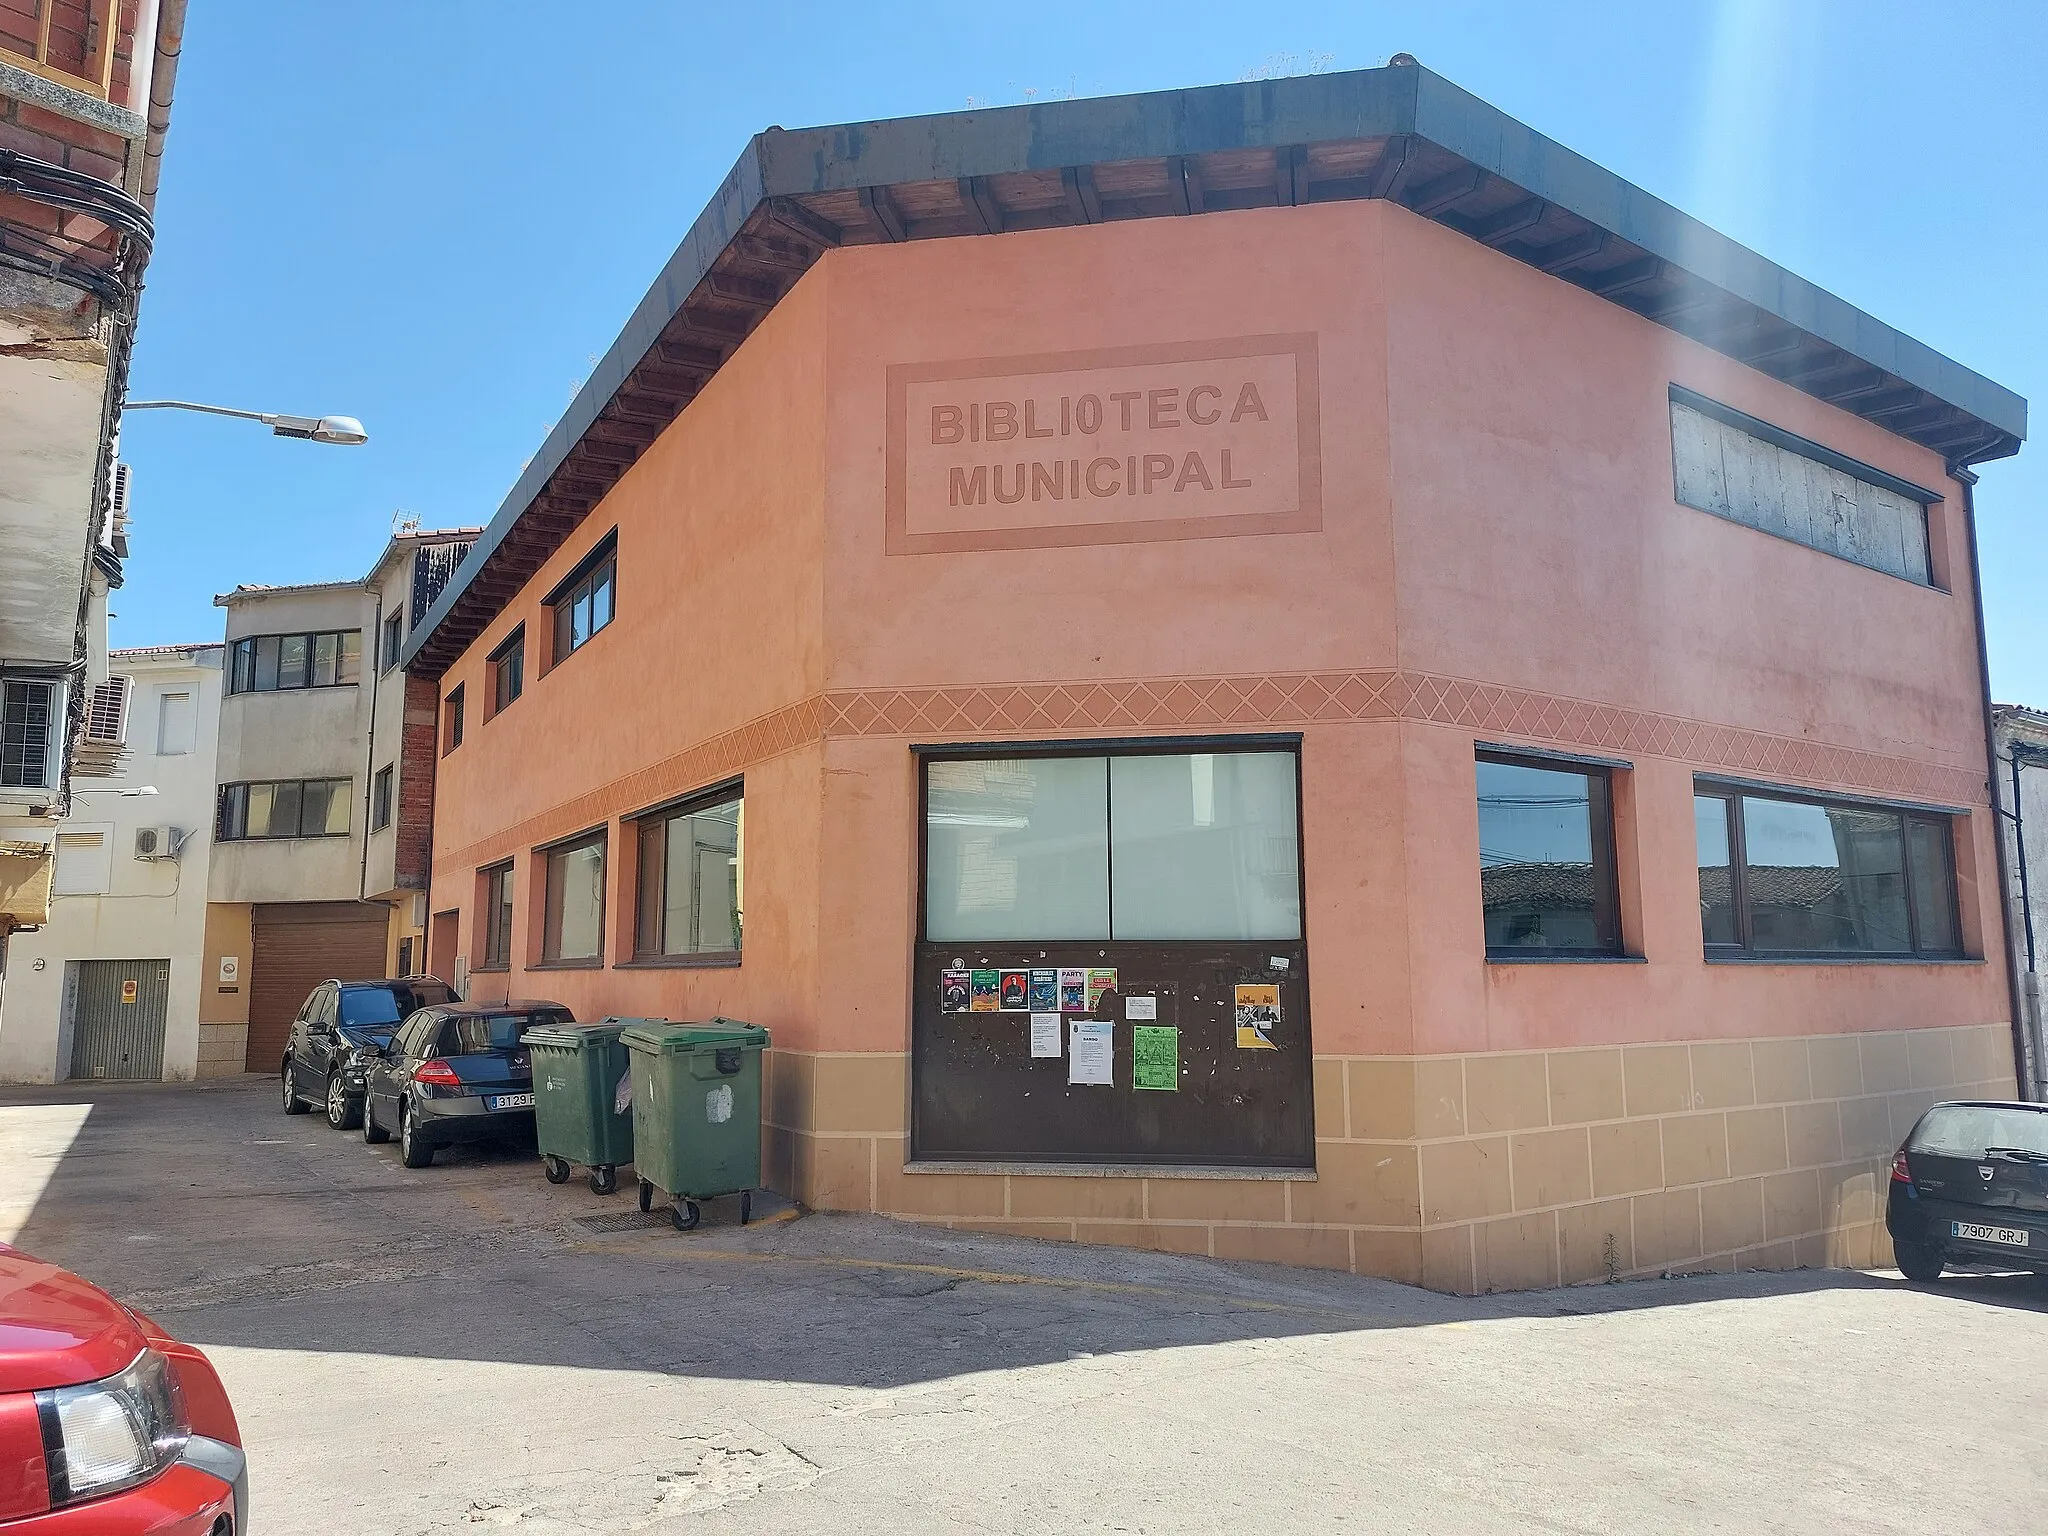 Photo showing: Exterior of the Municipal Library of Villanueva de la Vera.